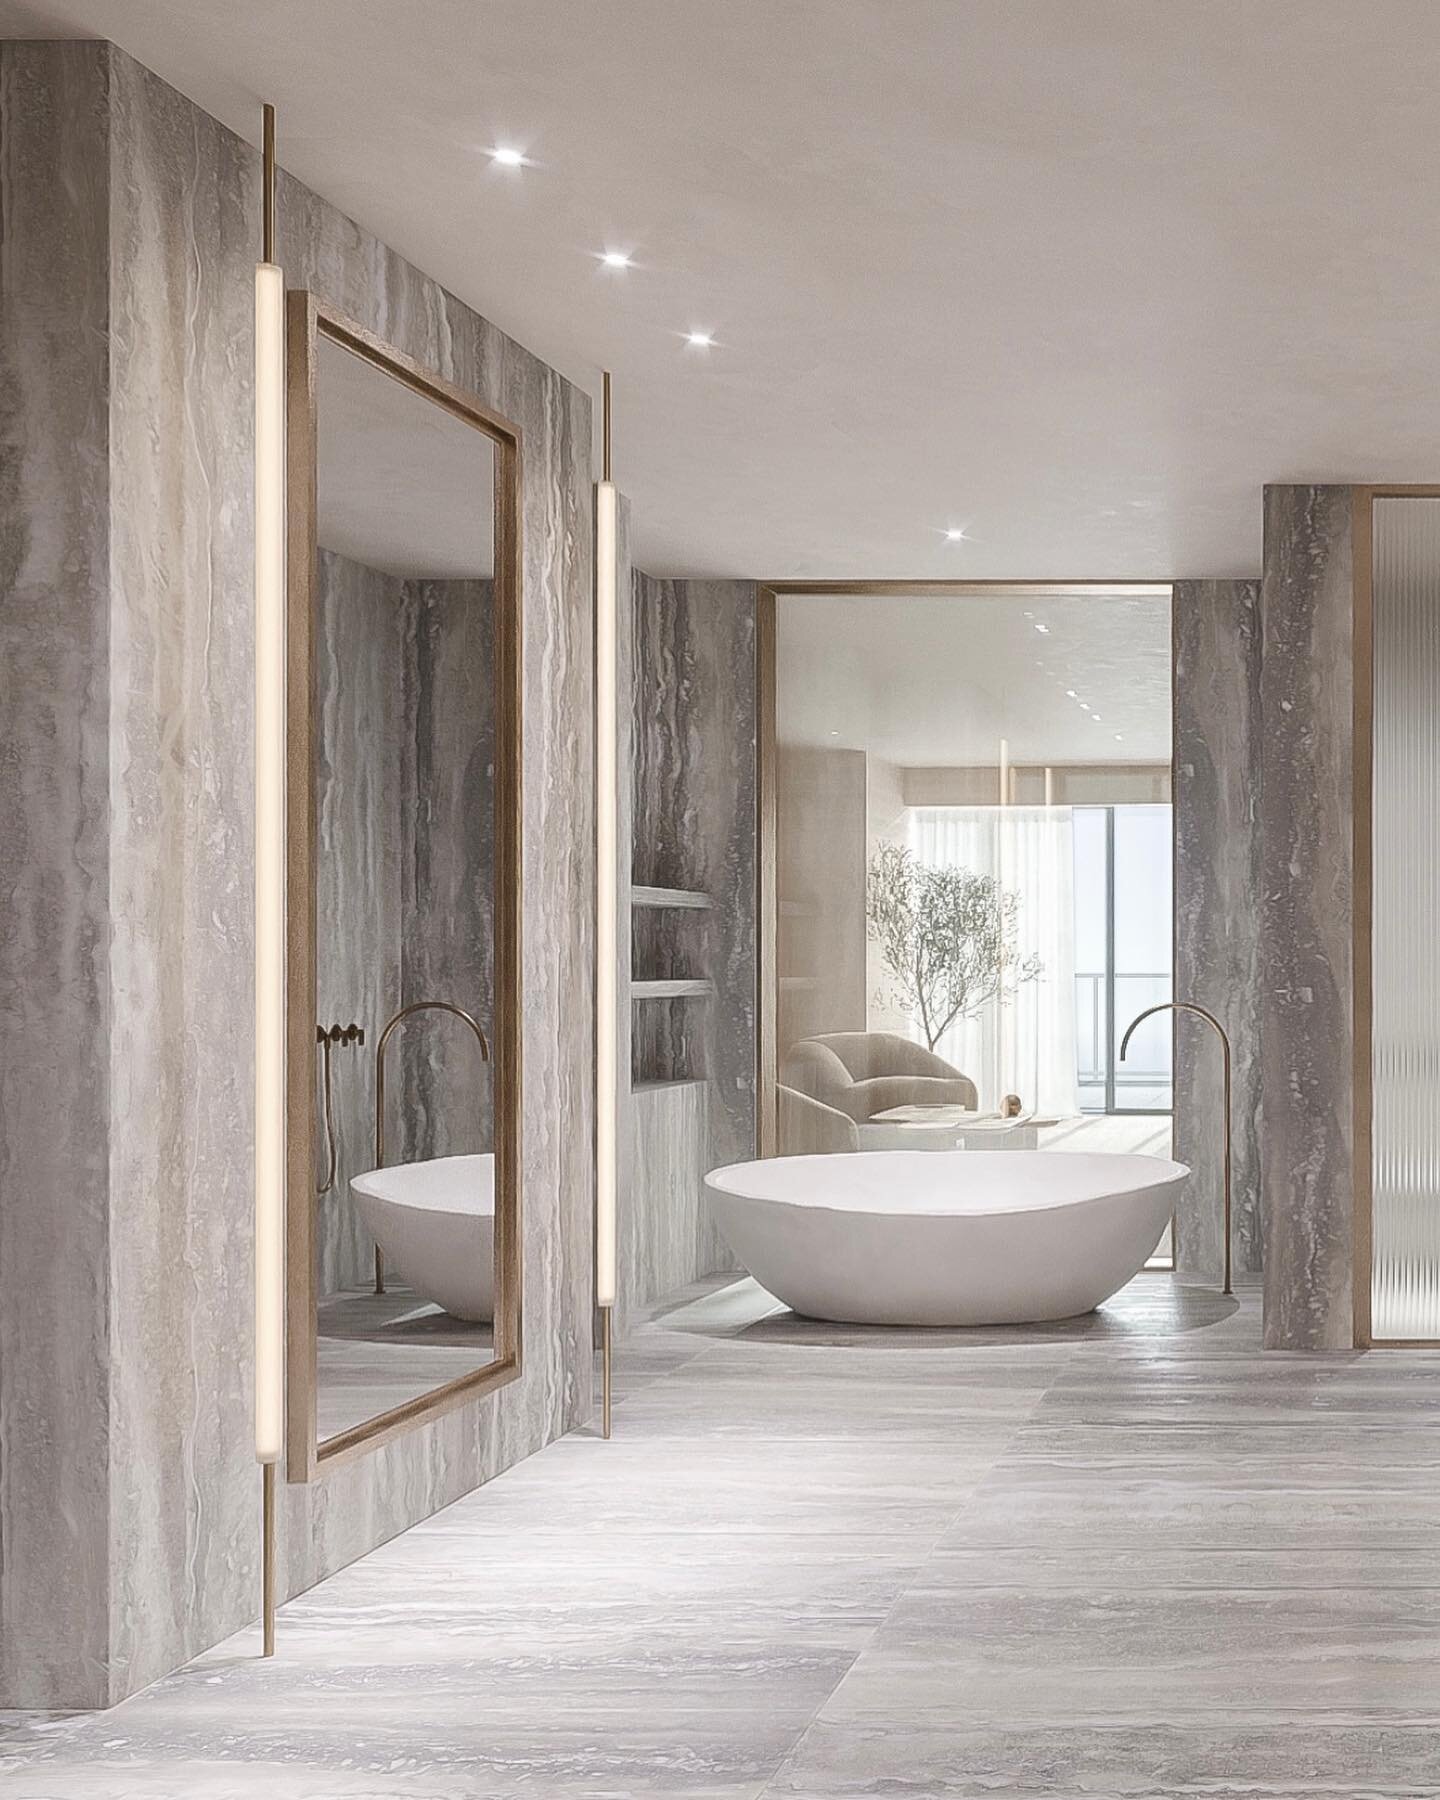 Bathroom with a view.

#design #asthetique #interiordesign #bathroom #bathroomdesign #homedesign #bathroomideas #homedesignideas #interiordesign #luxuryhomes